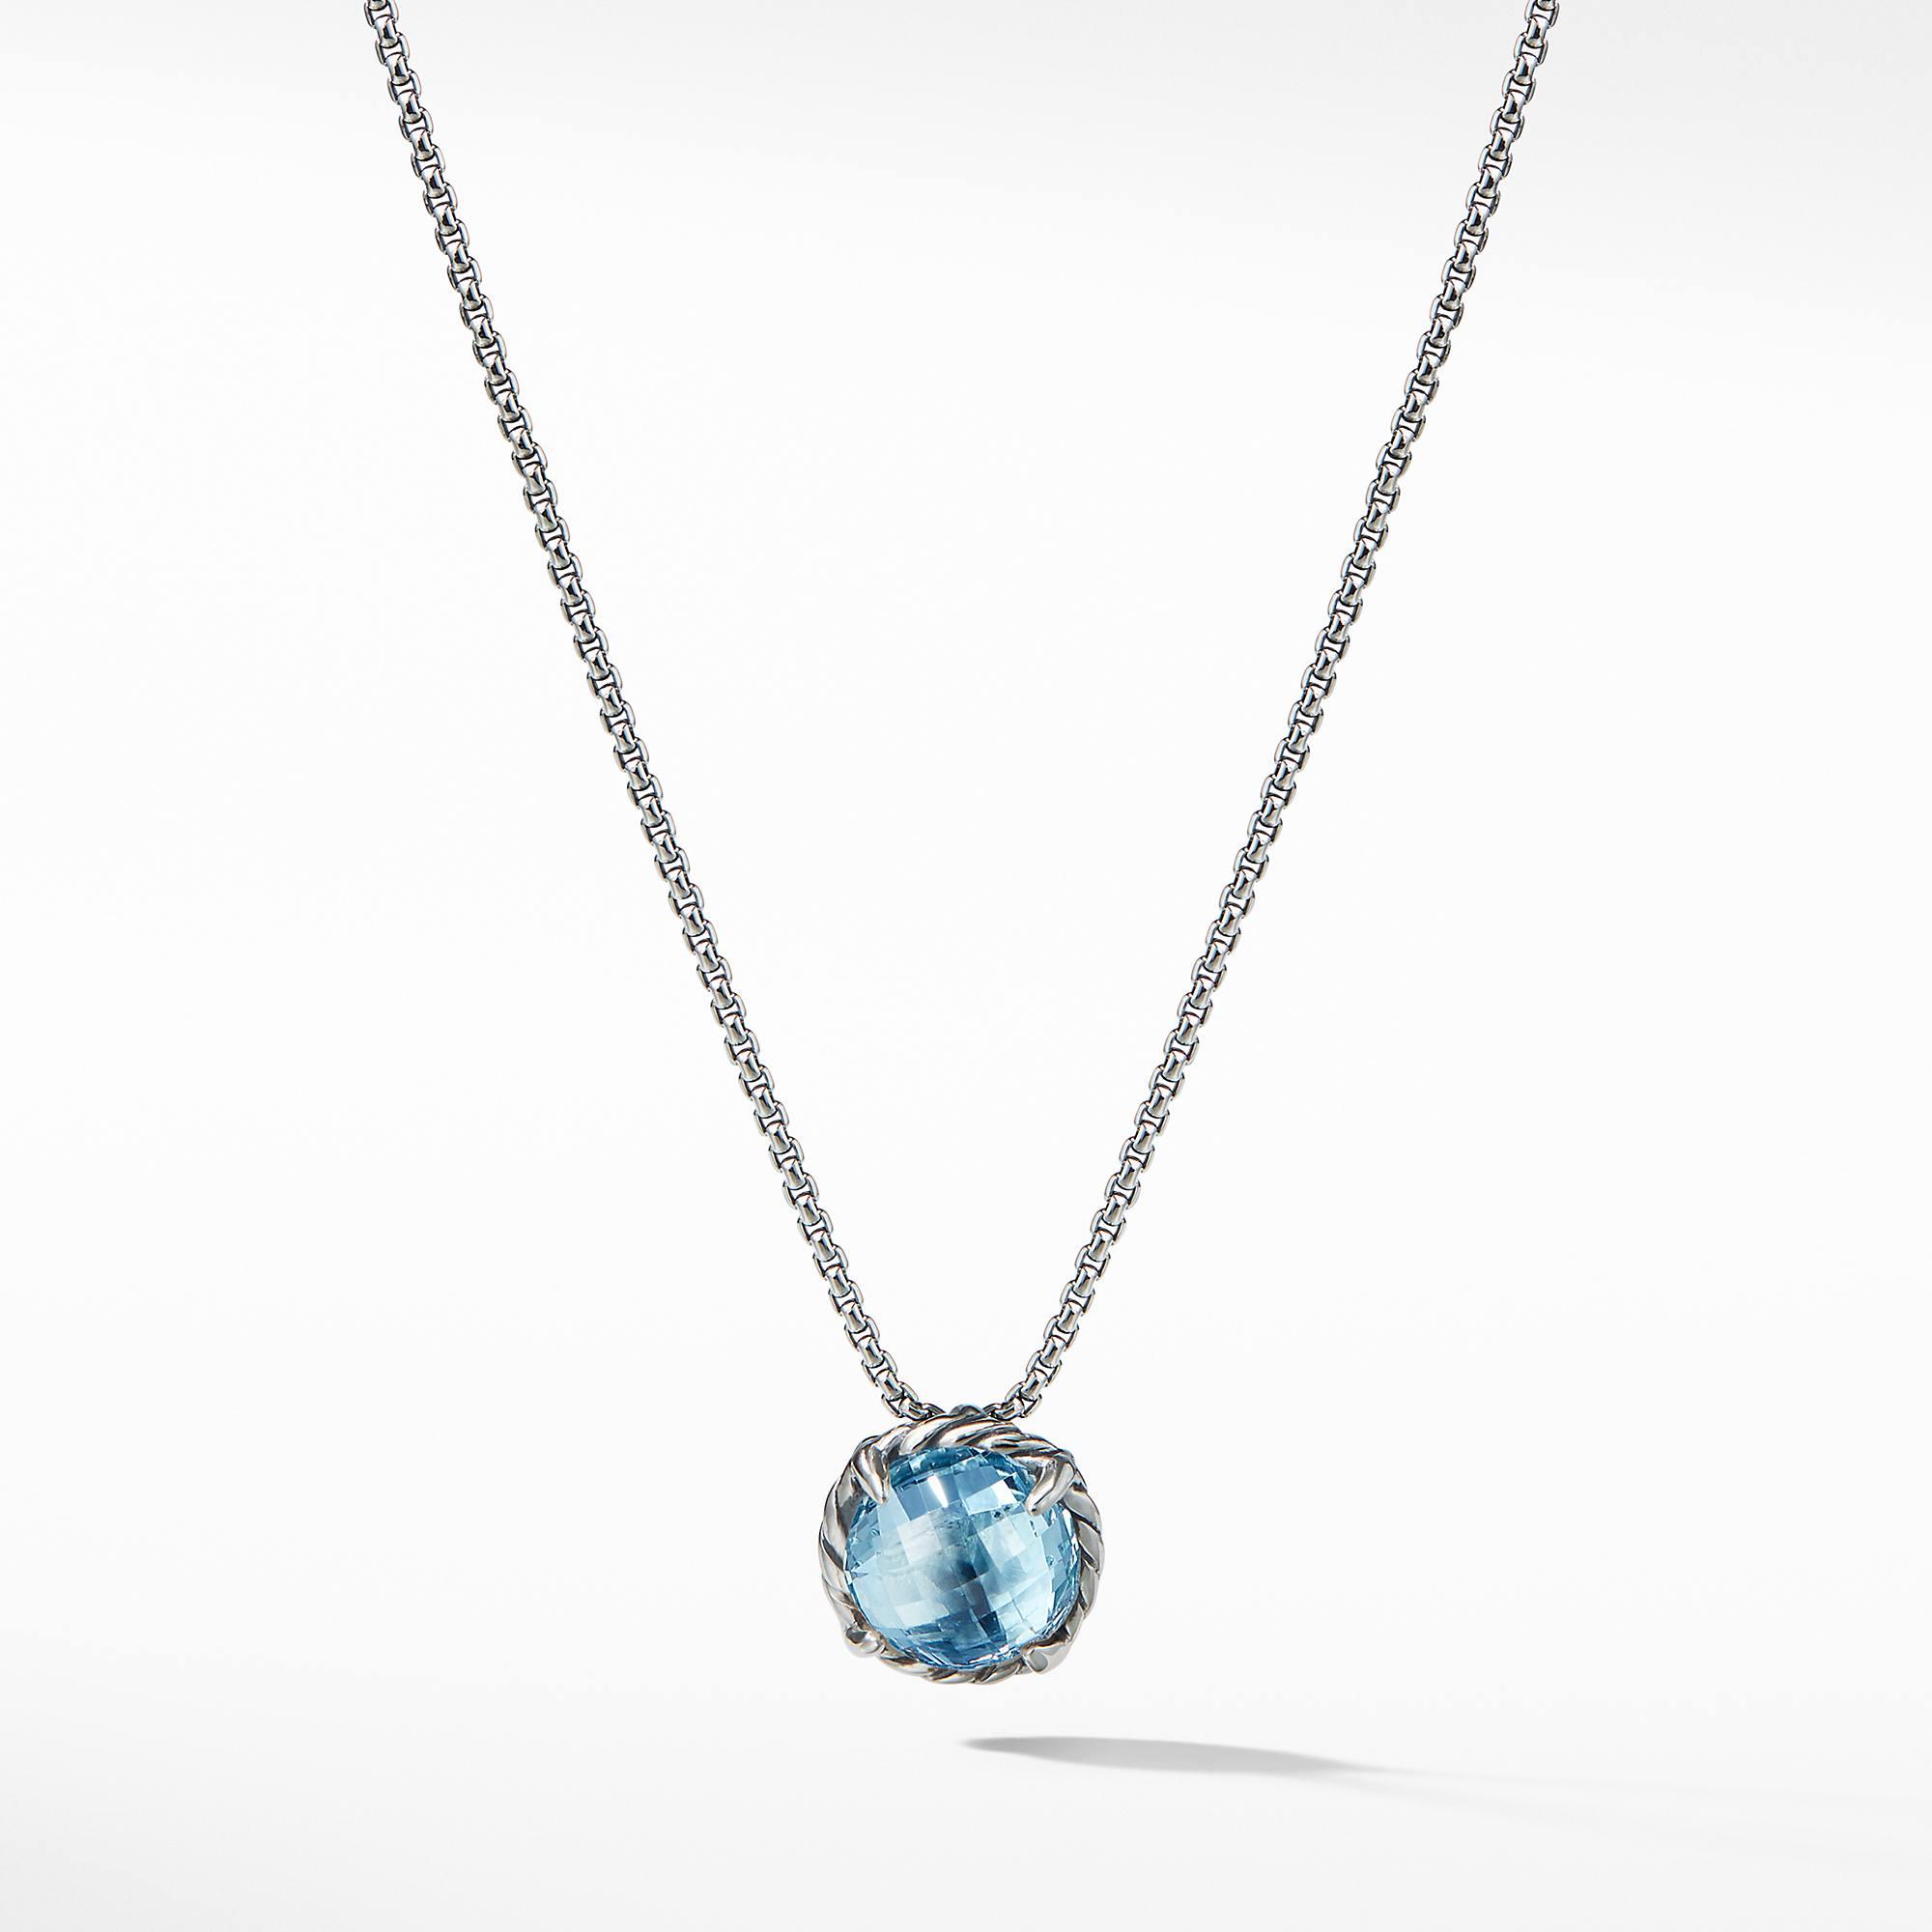 David Yurman Chatelaine Pendant Necklace with Blue Topaz